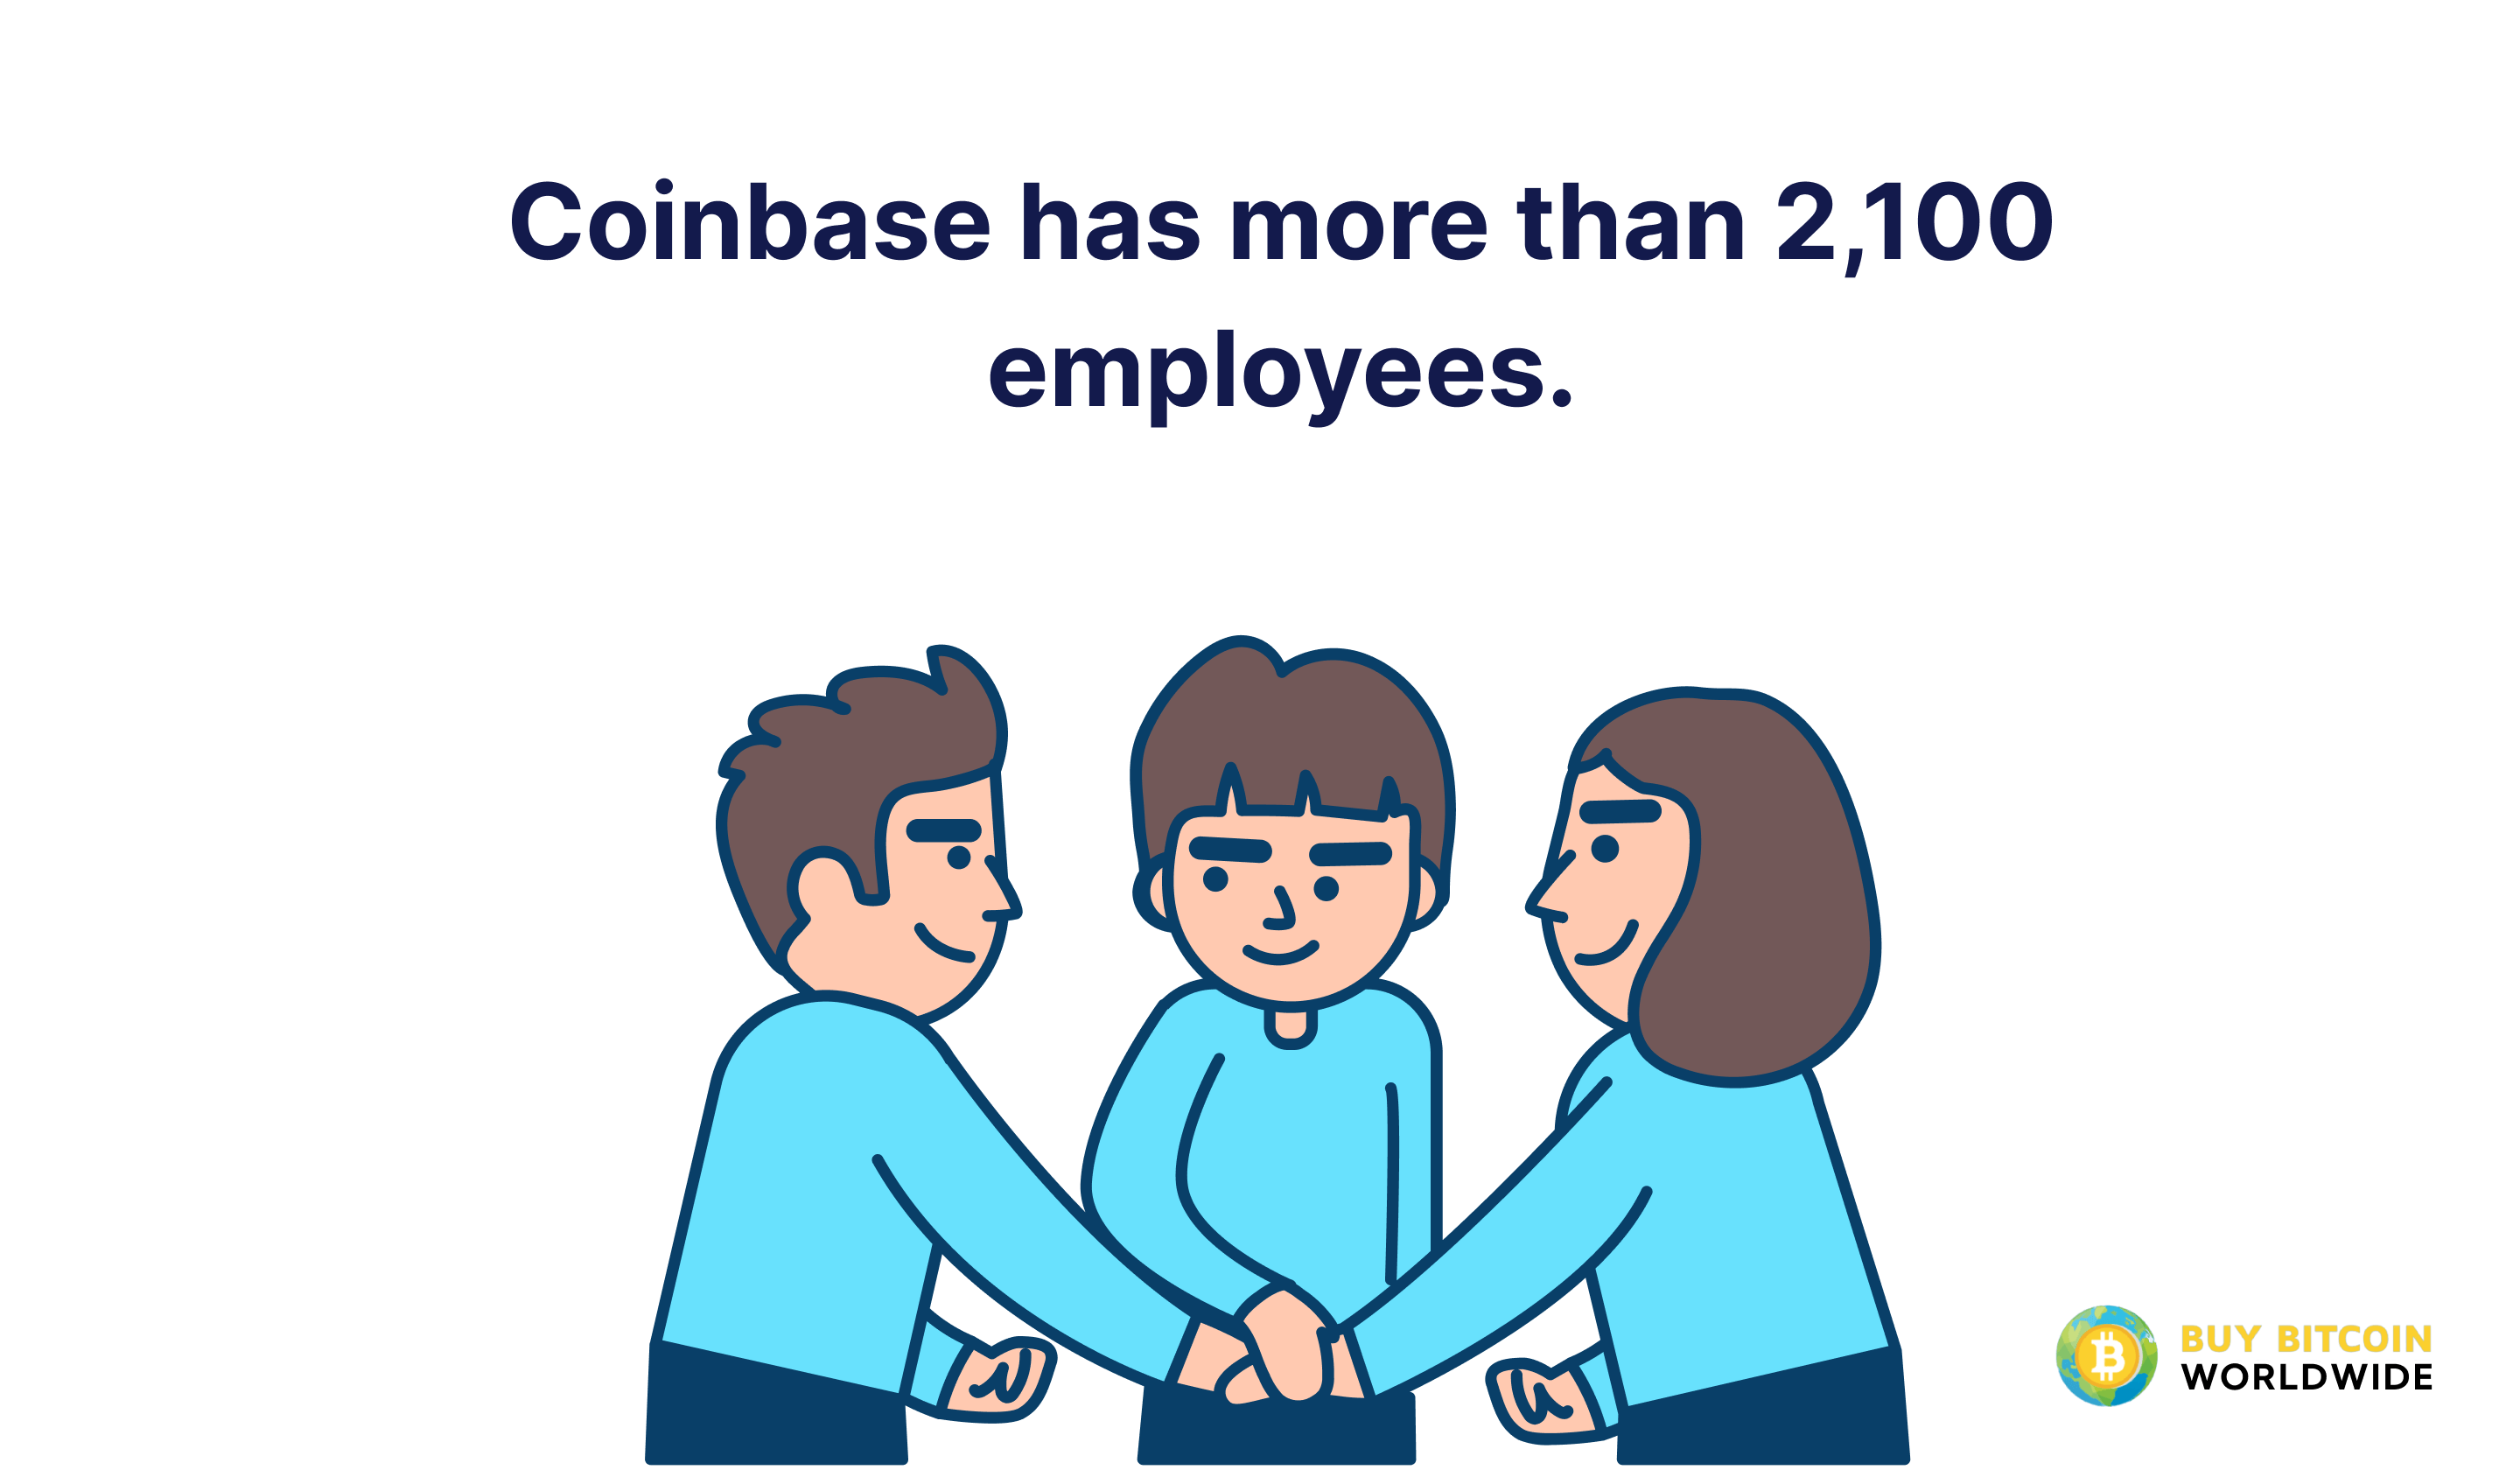 coinbase has more than 2,100 employees